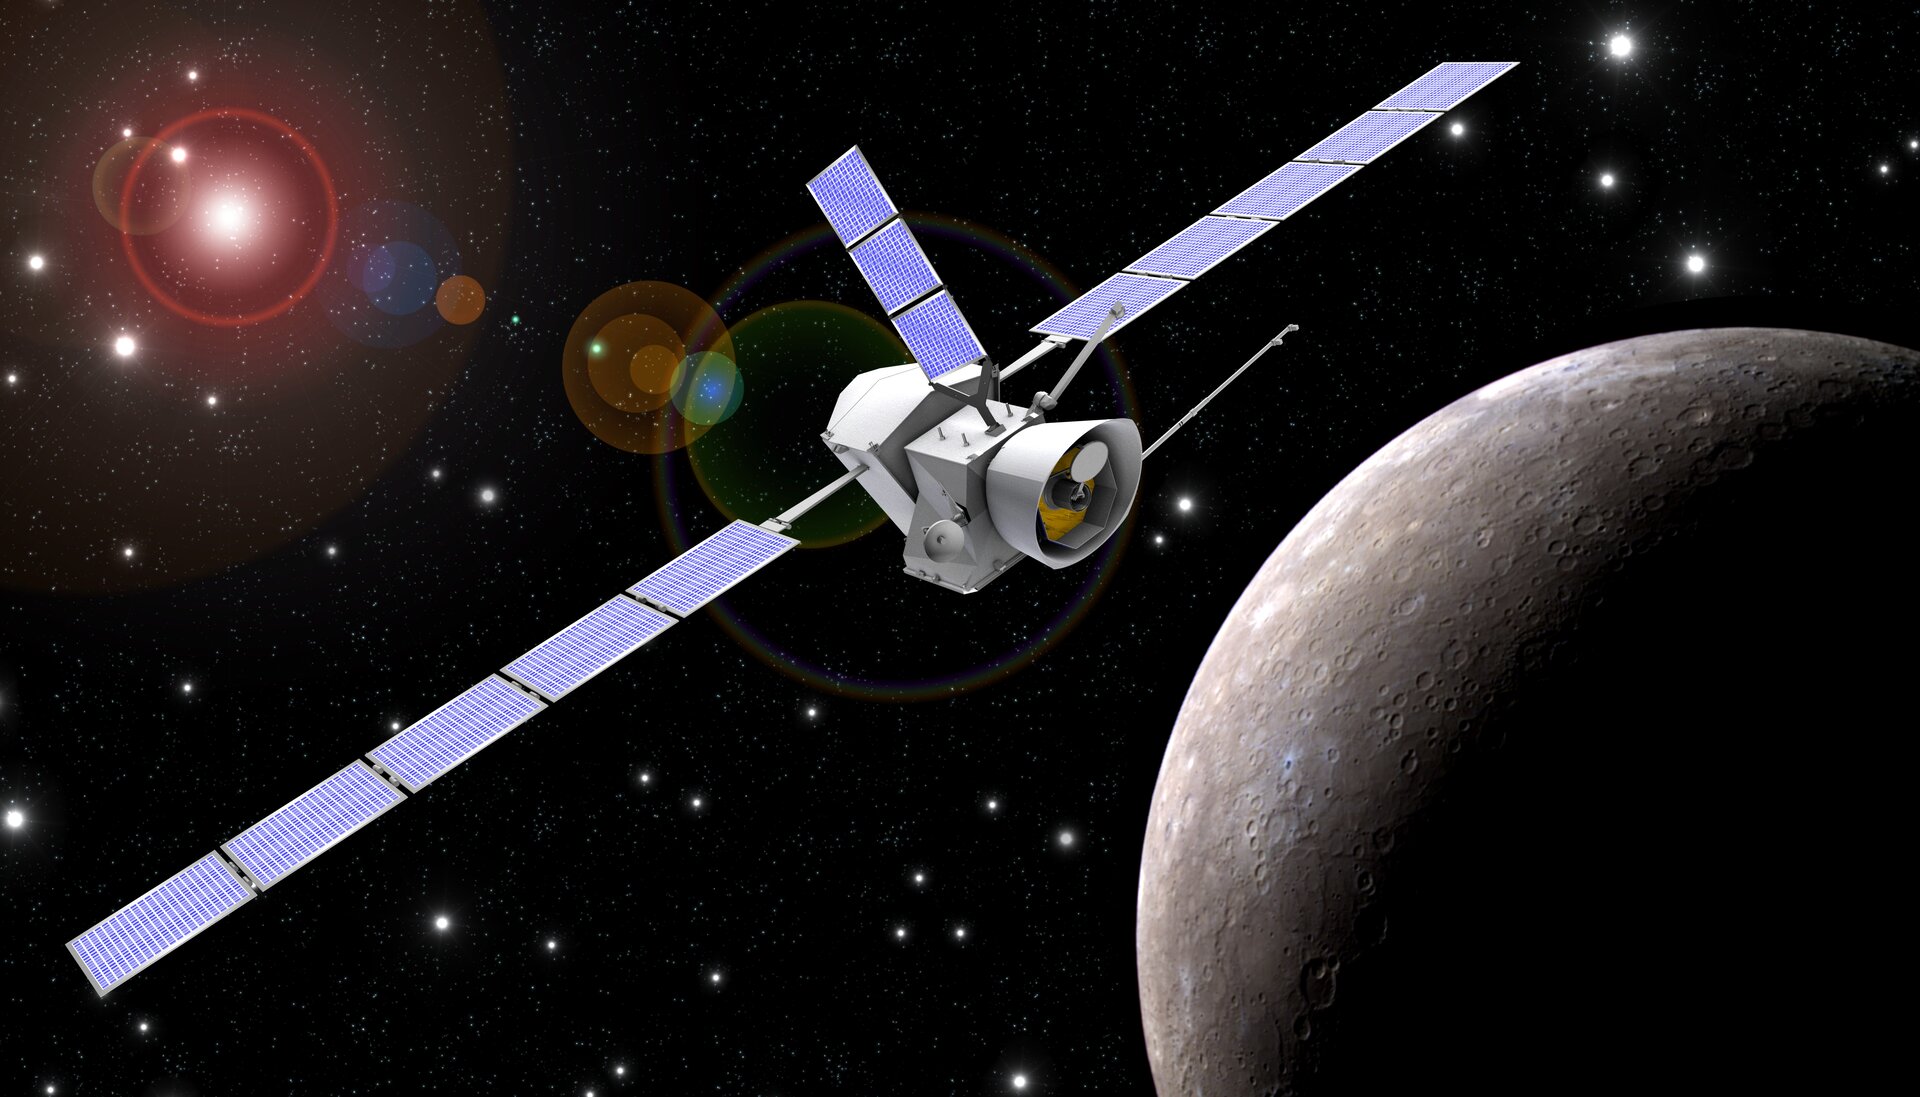 BepiColombo- ESA's Mercury mission